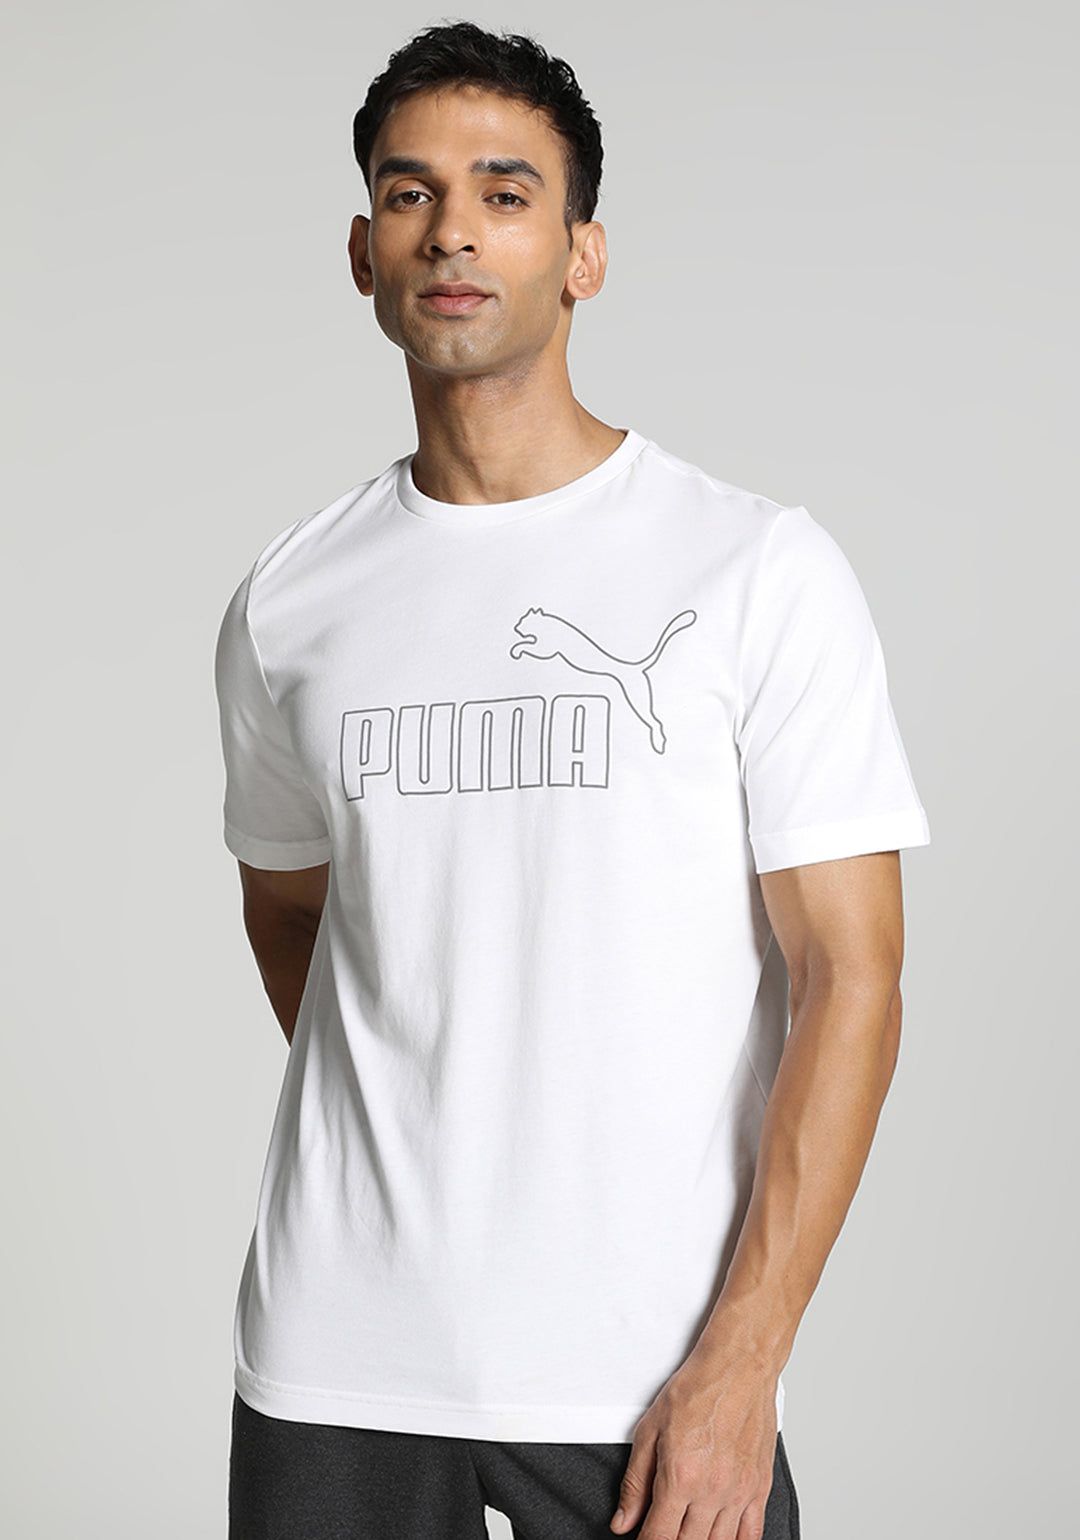 T-Shirts Merchandise: Buy Official Jerseys T-Shirts Shirts T shop & | Online